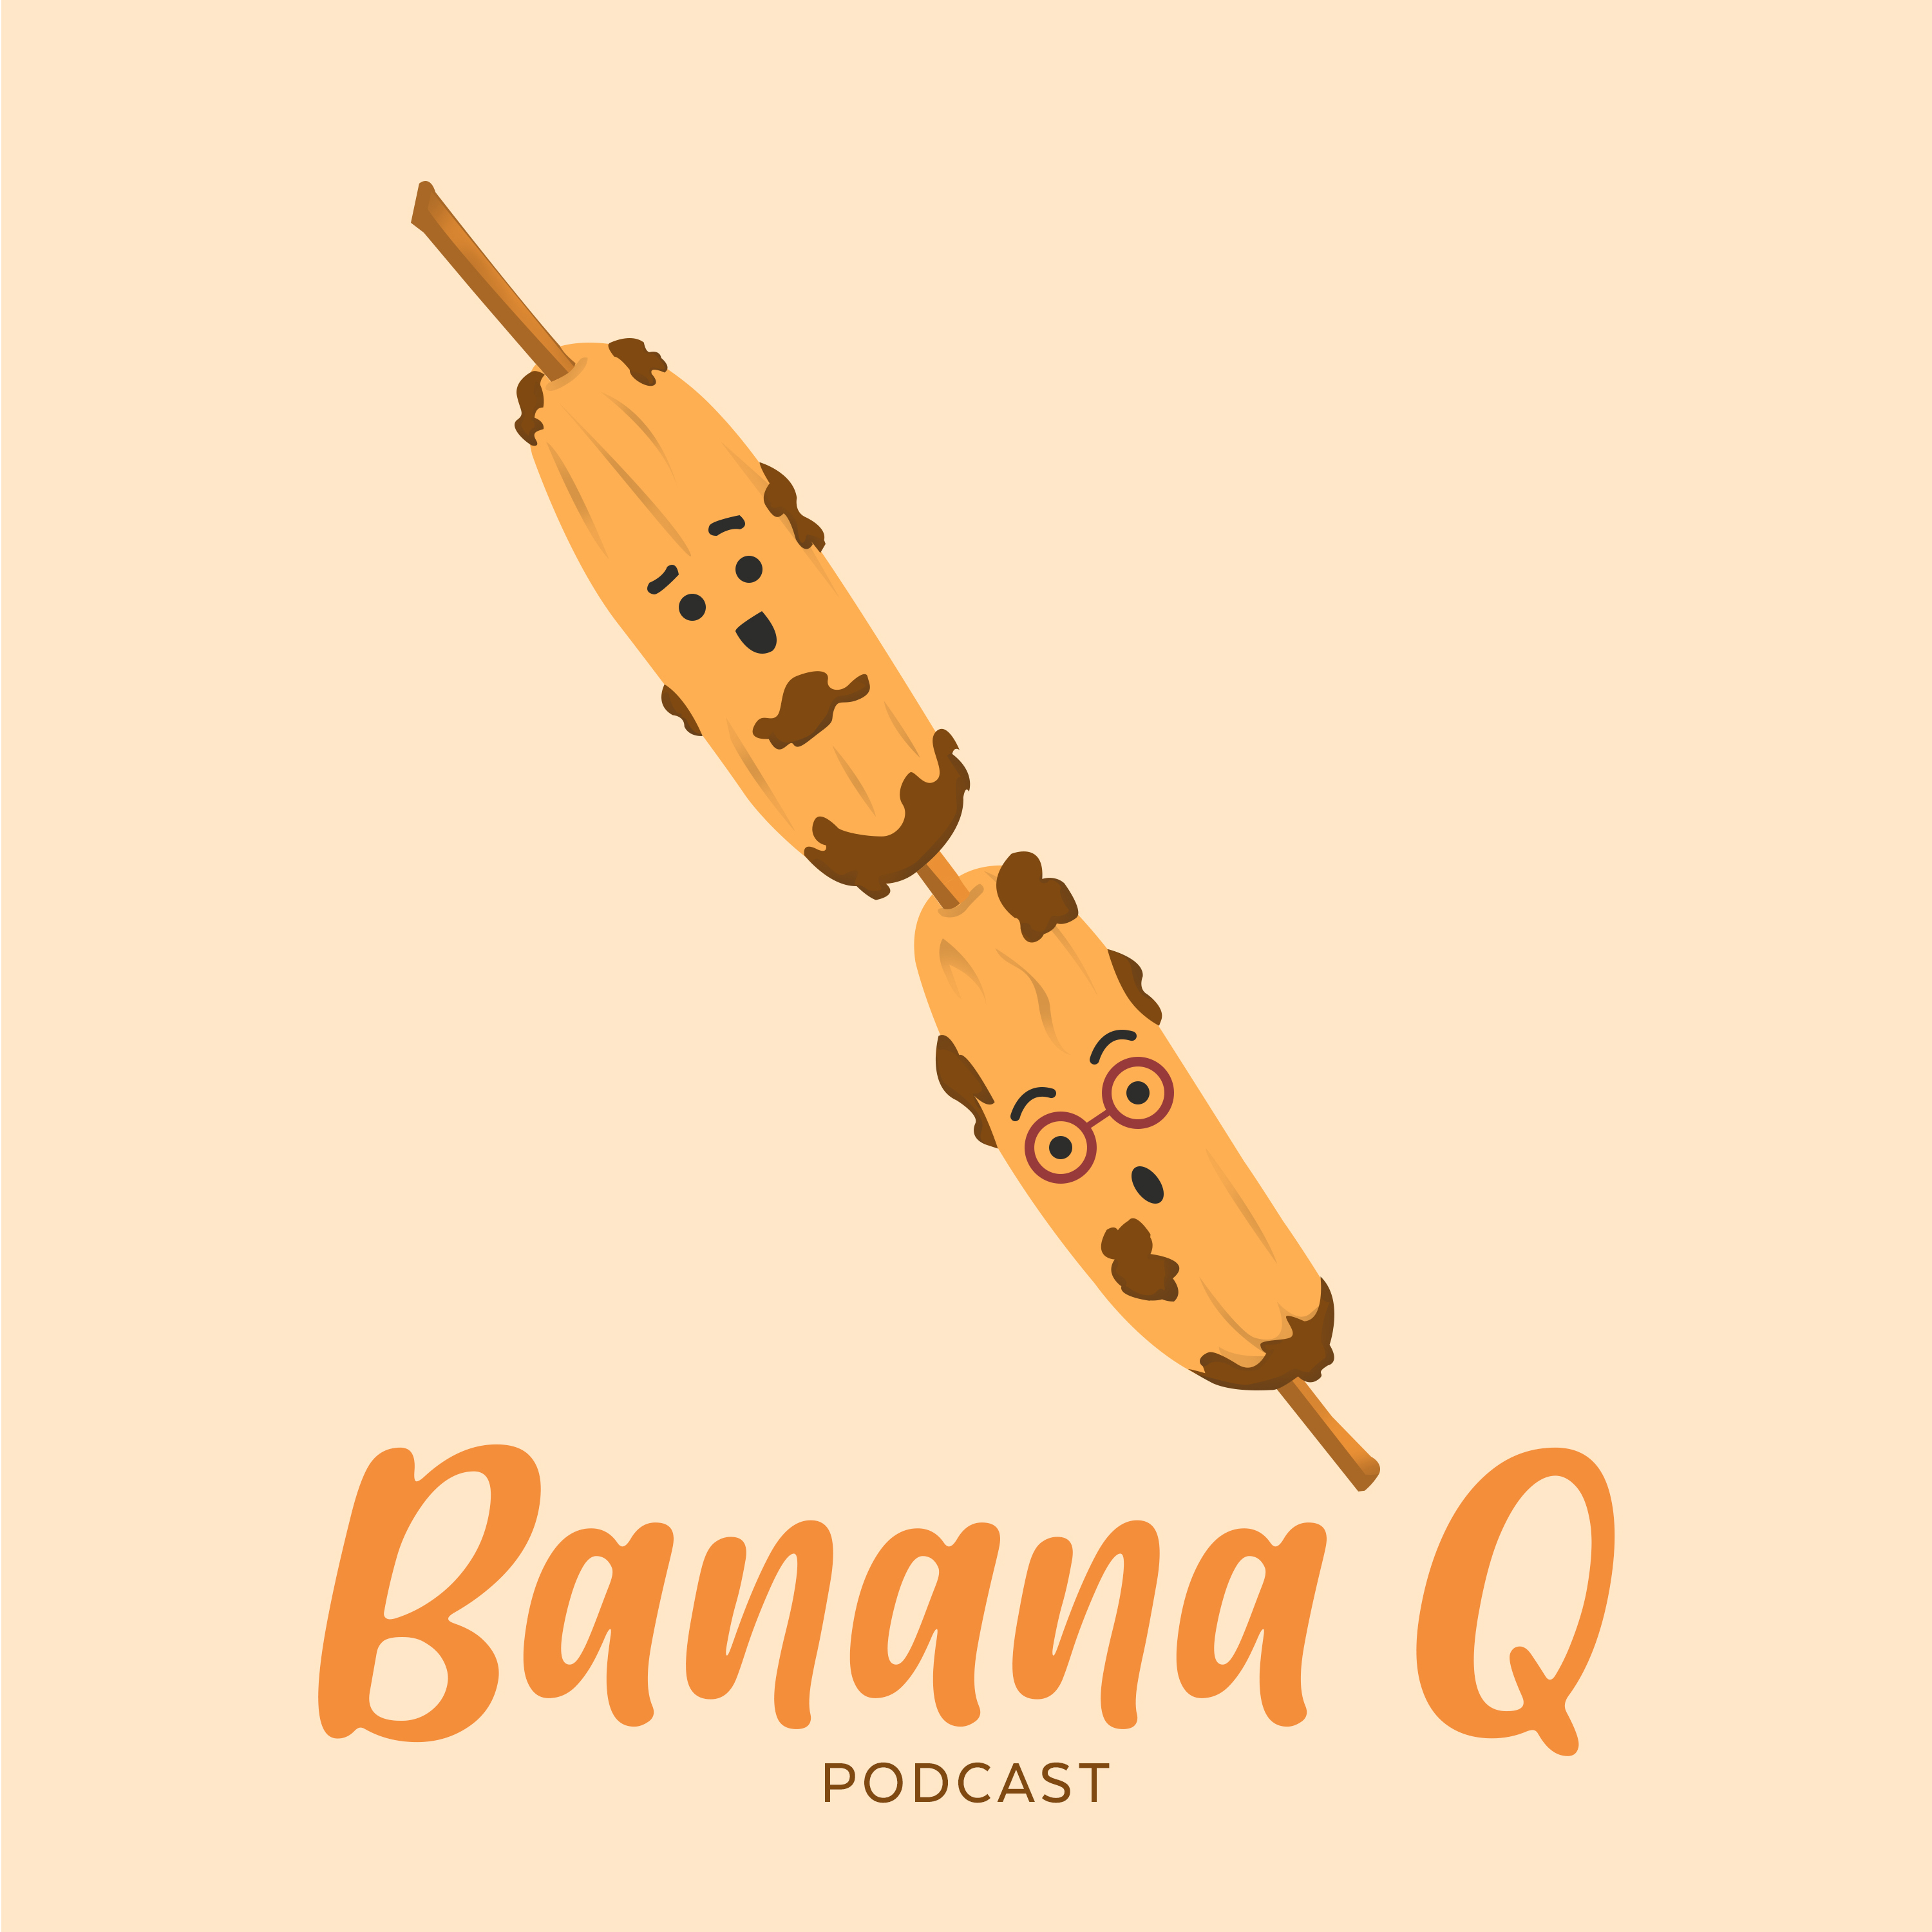 Banana Q: a Filipino-Flavored Podcast